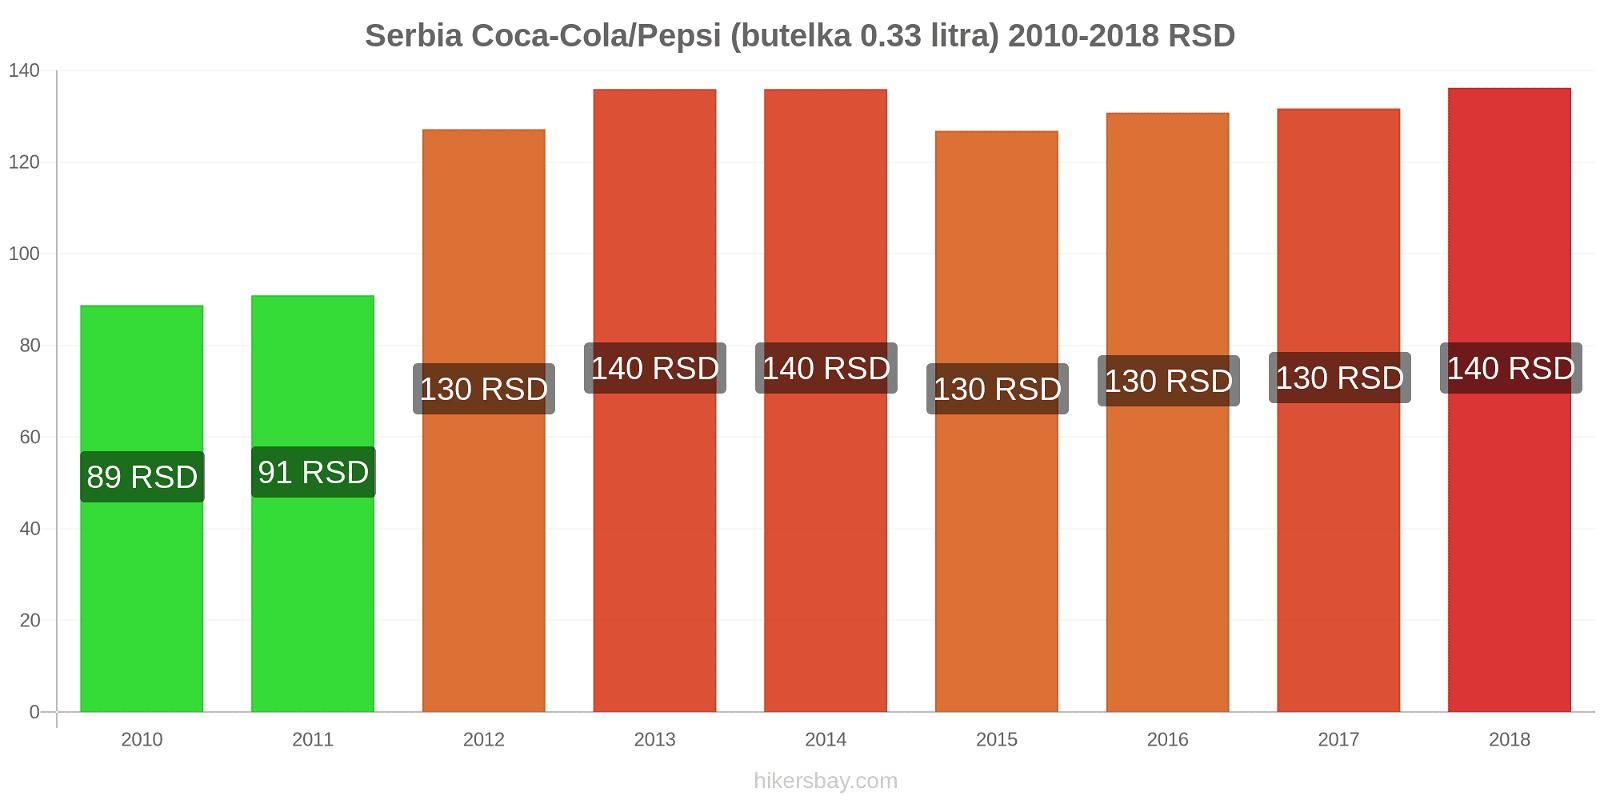 Serbia zmiany cen Coca-Cola/Pepsi (butelka 0.33 litra) hikersbay.com